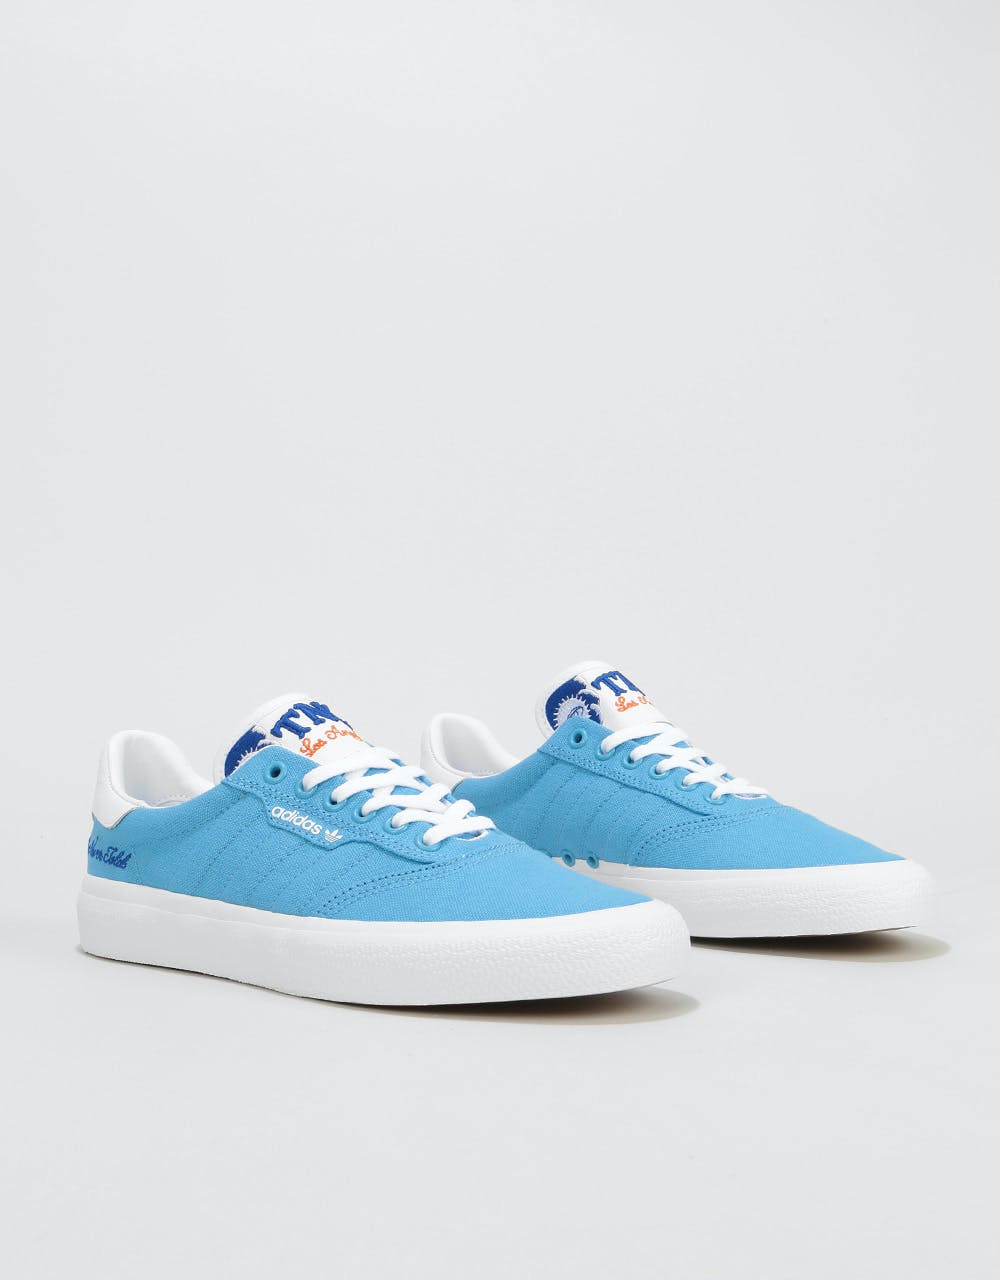 Adidas x TNT 3MC Skate Shoes - Light Blue/White/Collegiate Blue